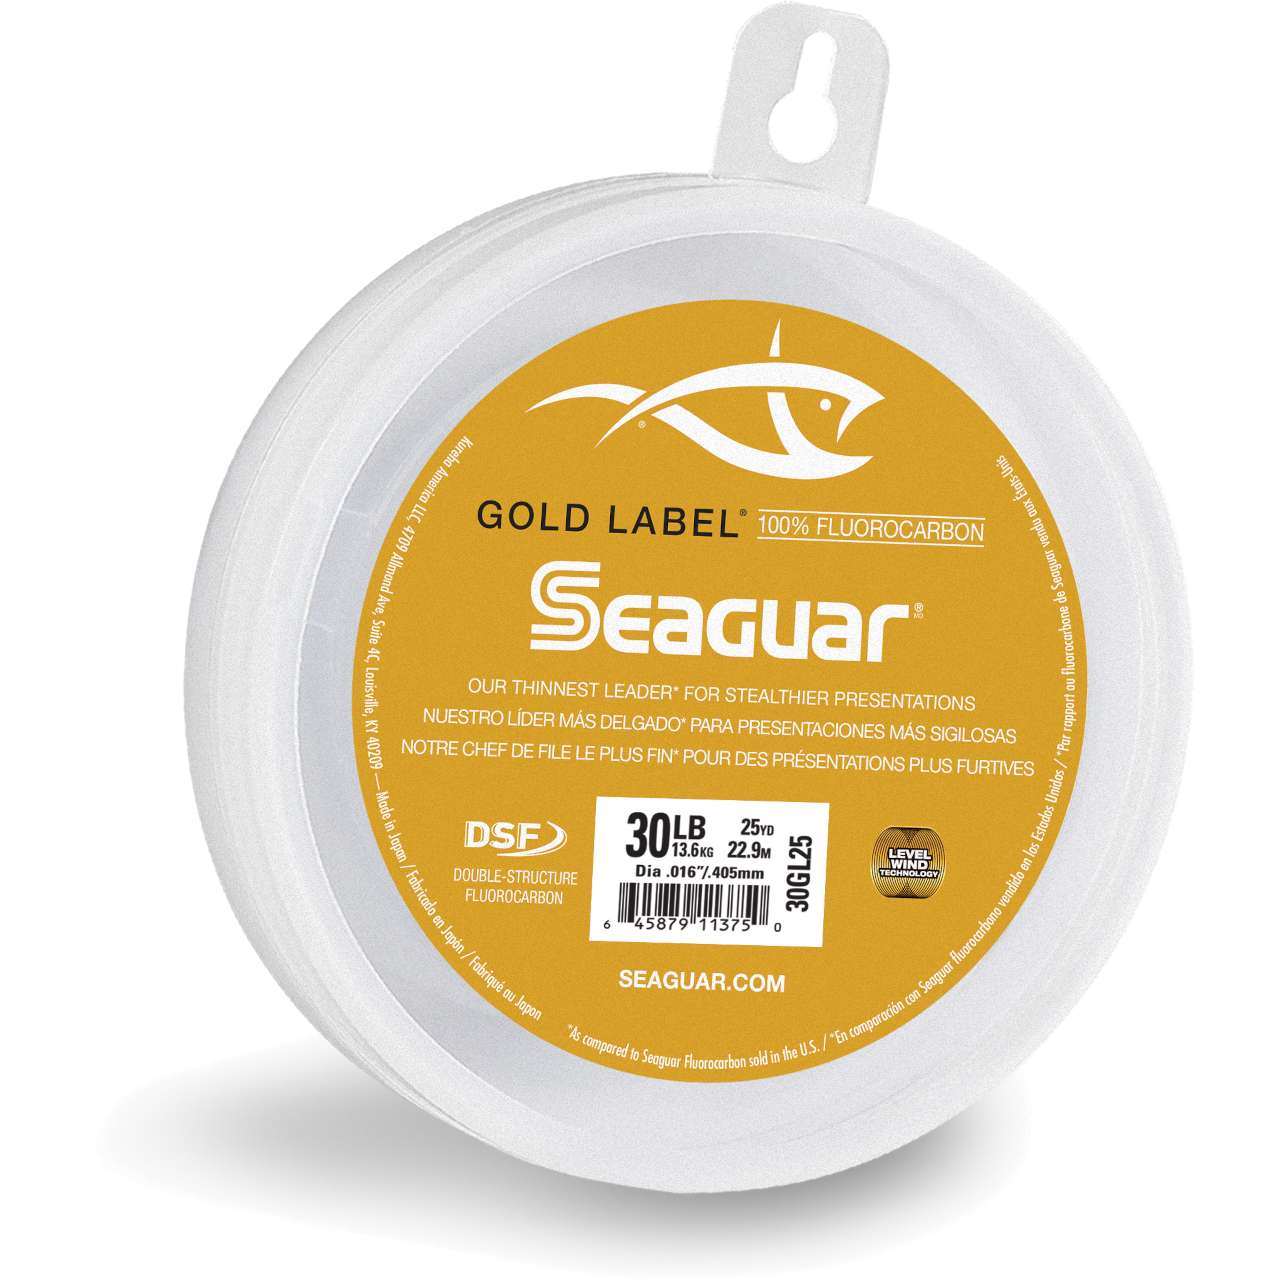 Seaguar Gold Label 100% Fluorocarbon Fishing Leader 25yd 